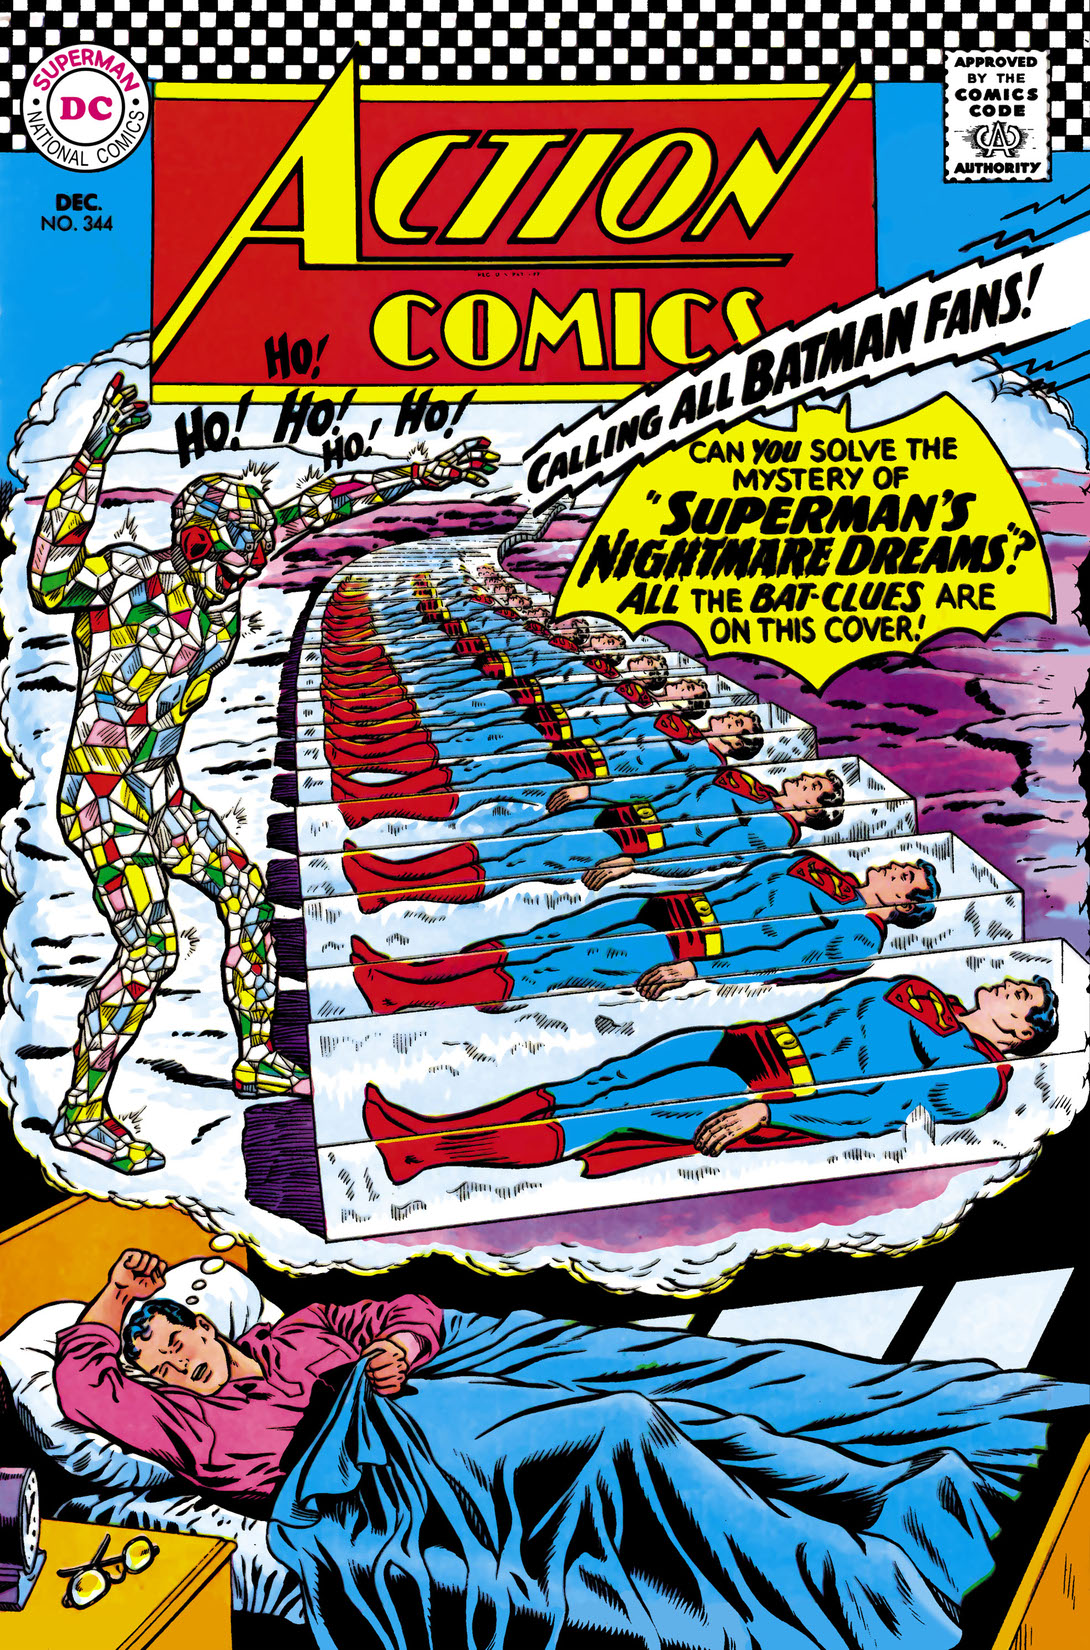 Action Comics (1938-) #344 preview images